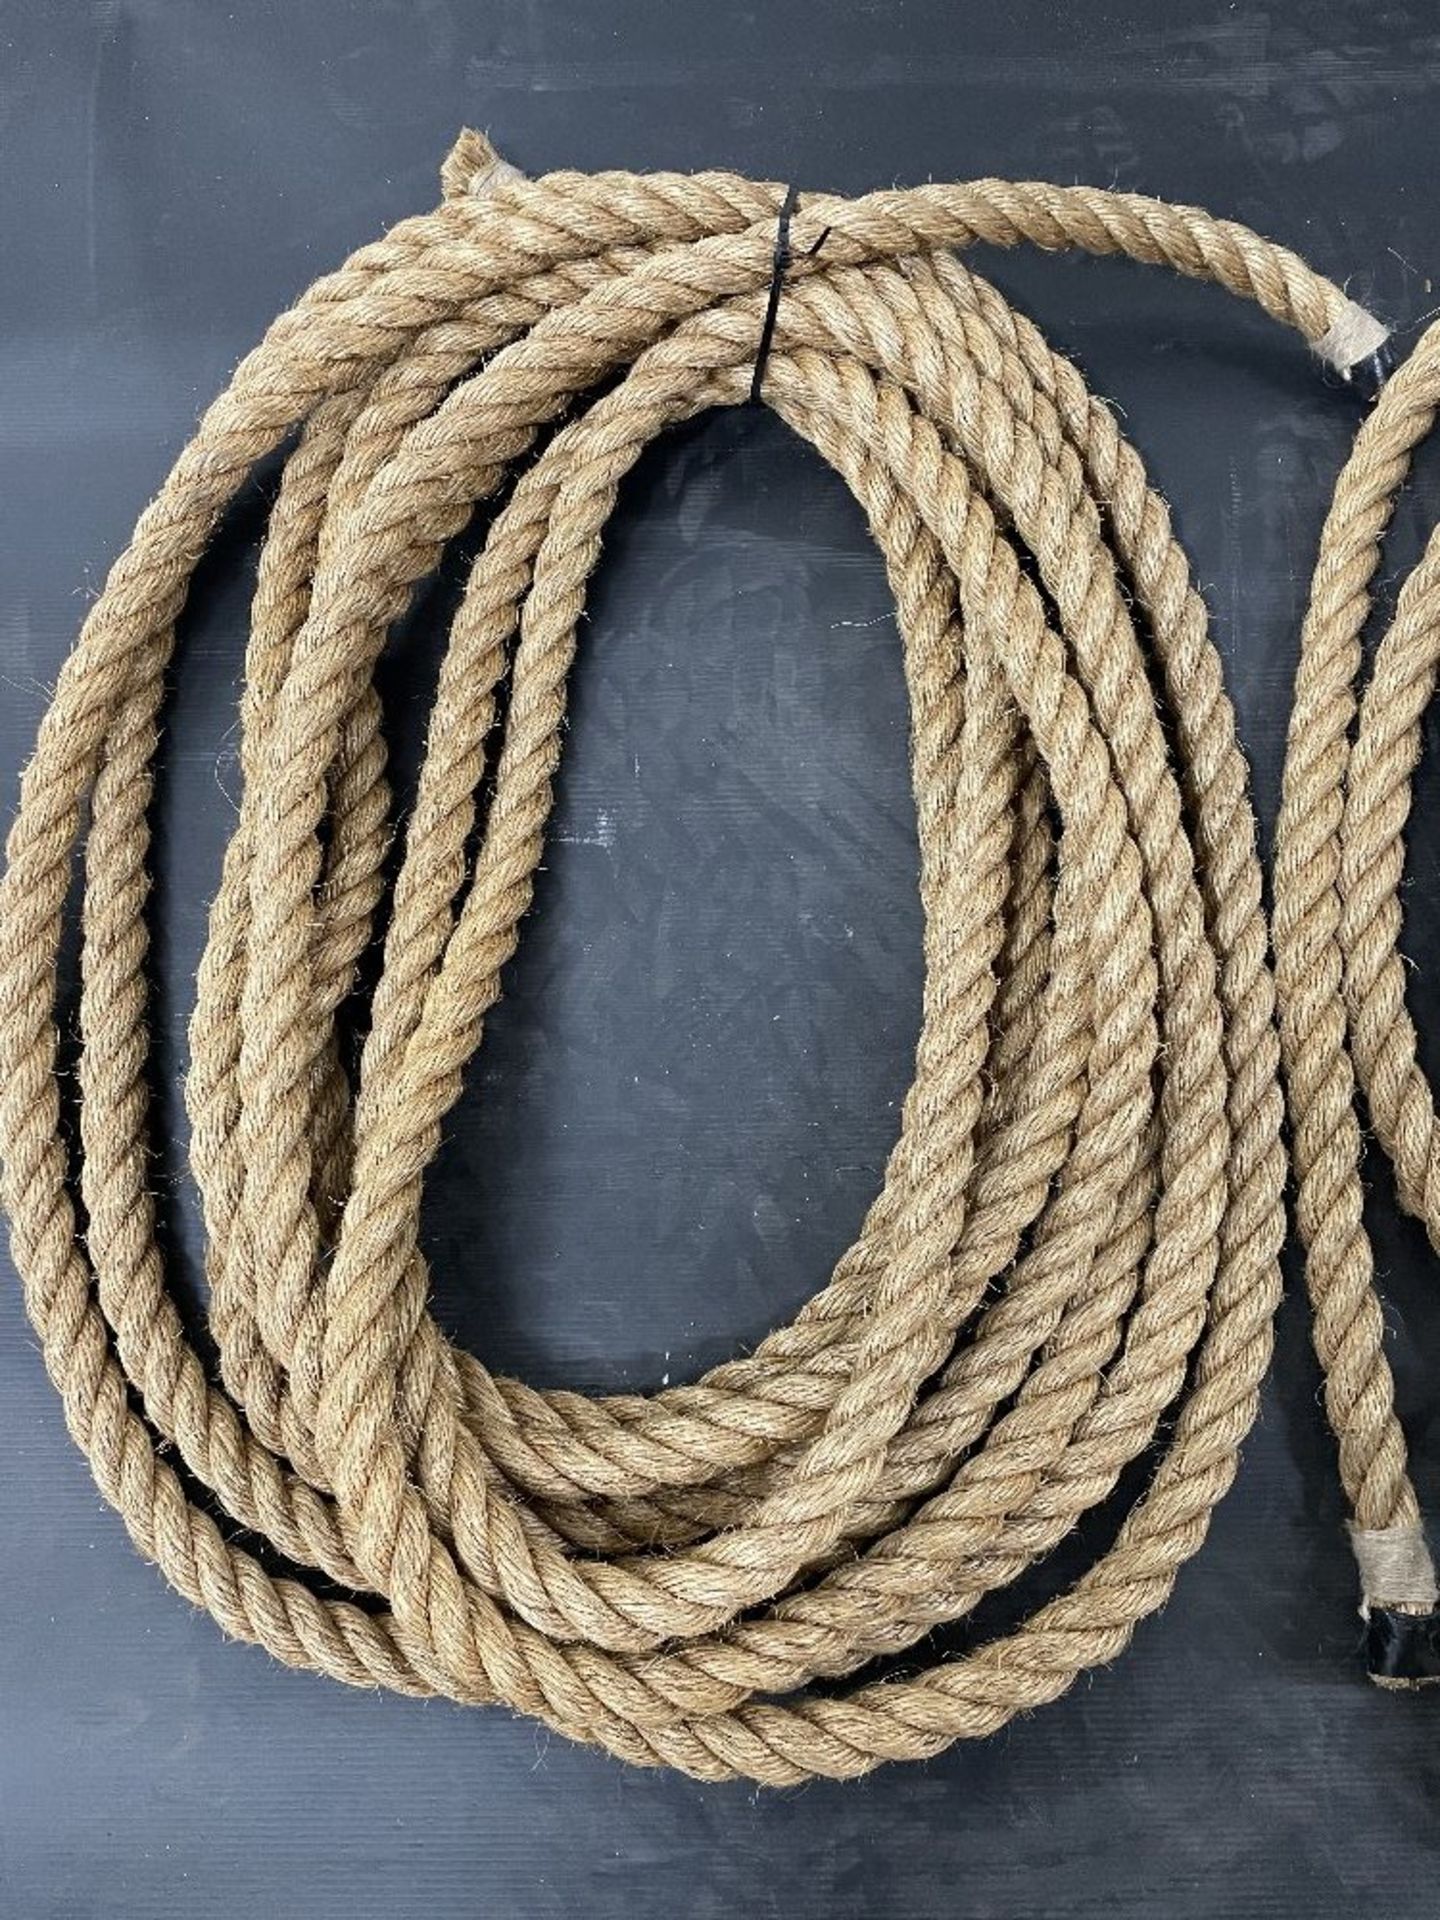 2 x Rope Bundle Props - Image 2 of 2